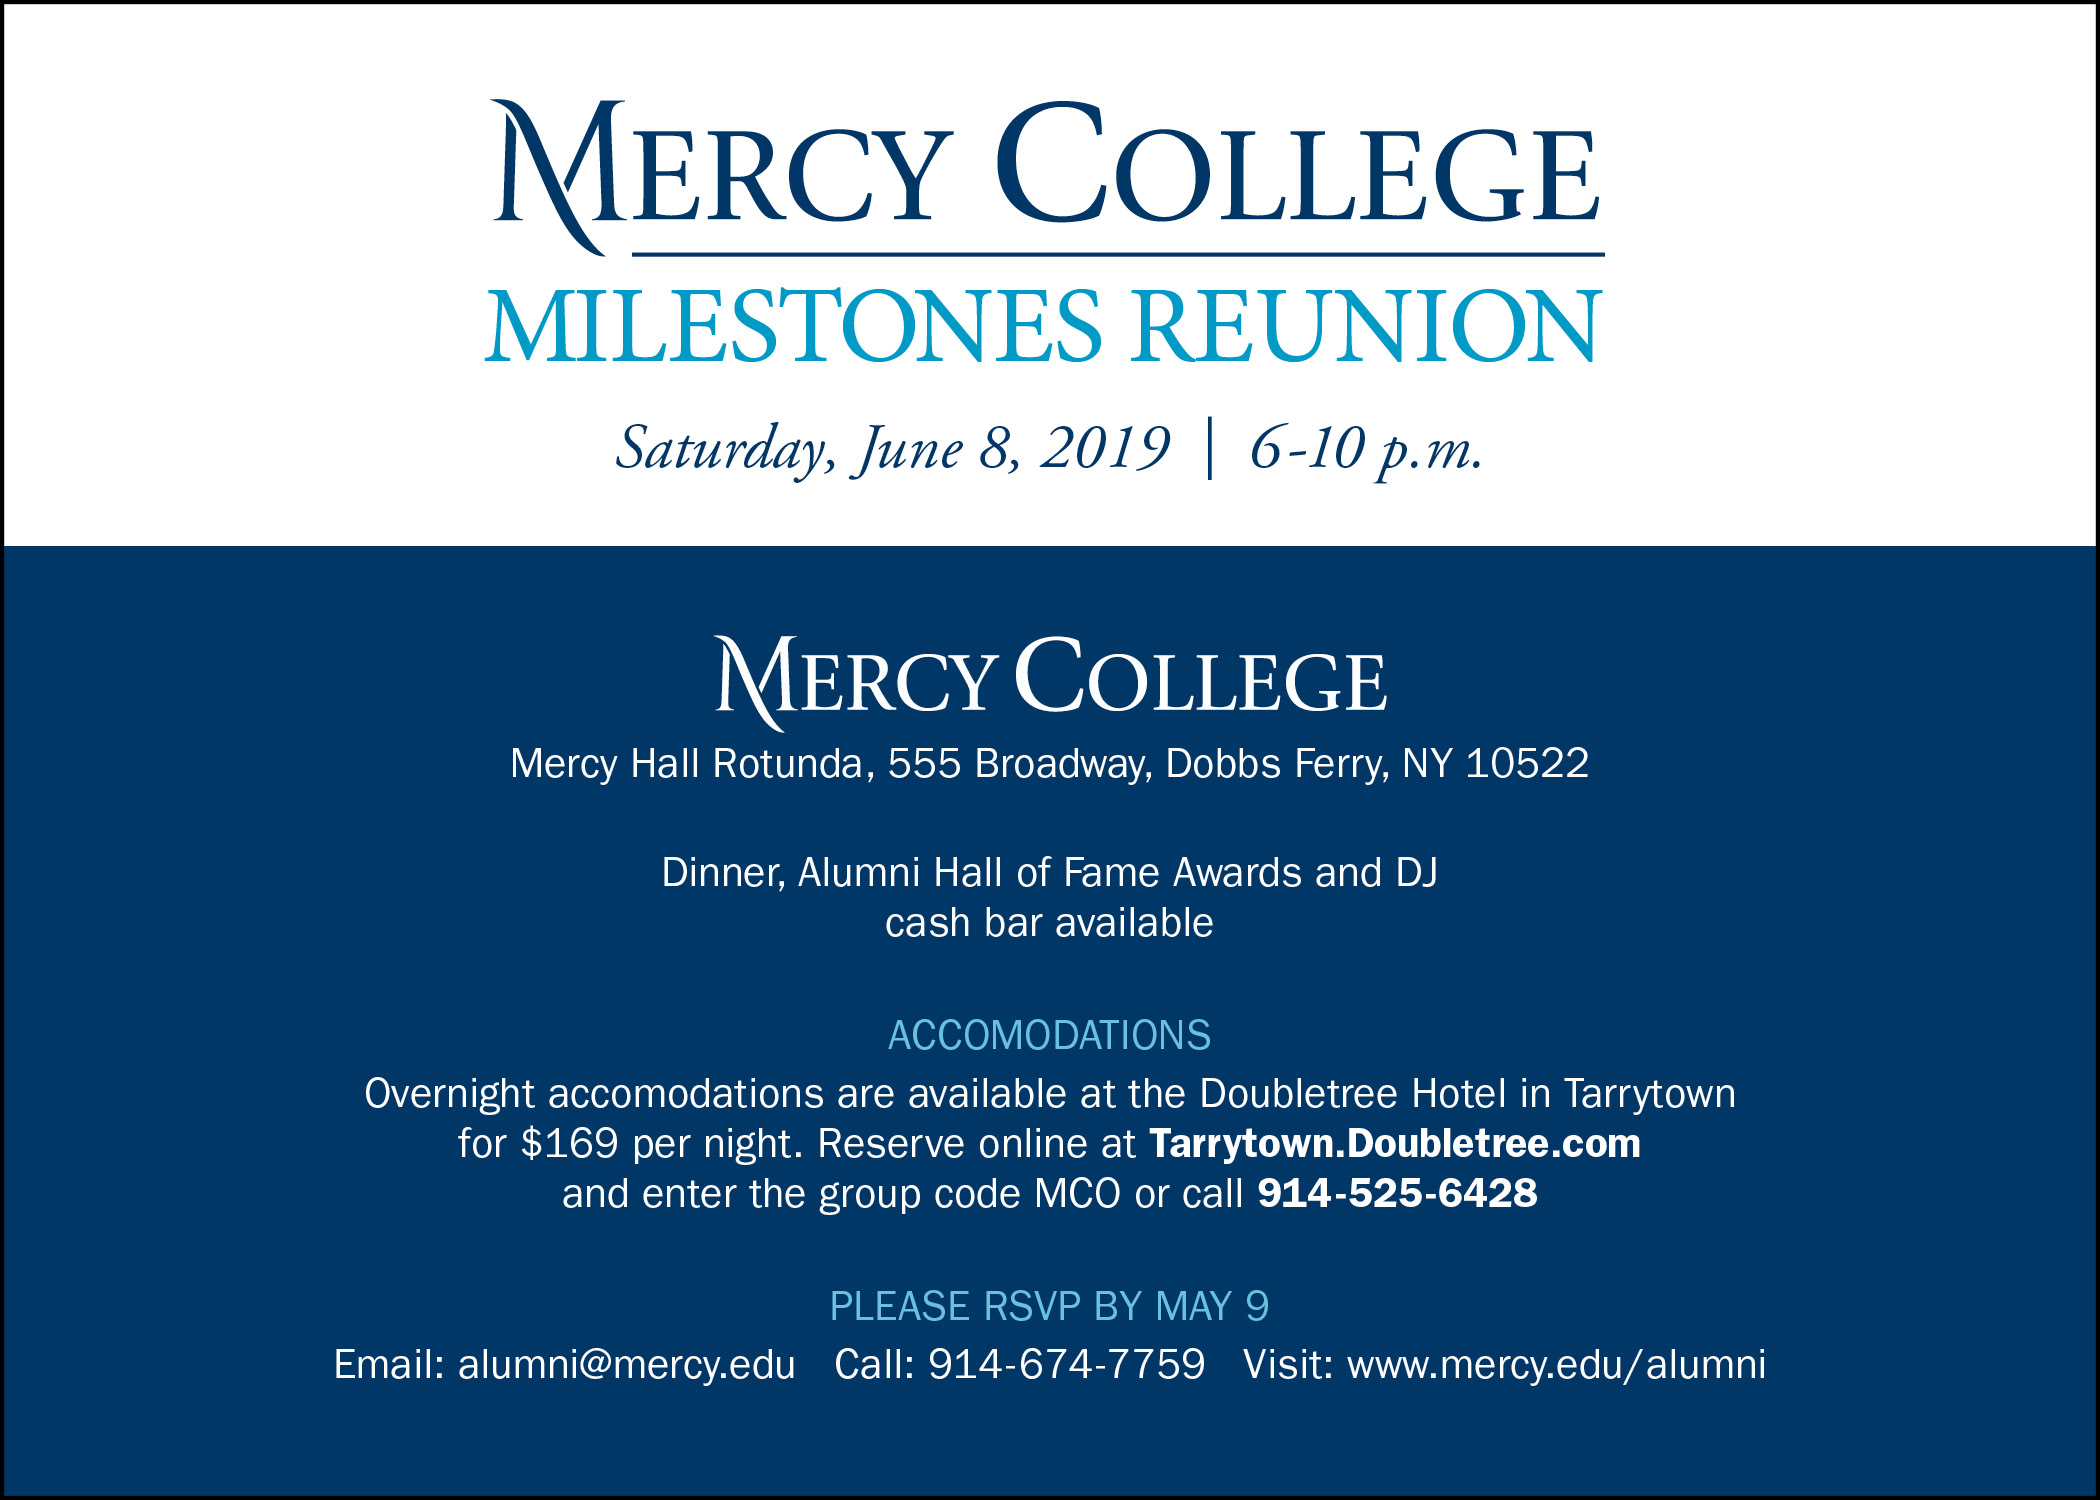 Milestone Reunion Invitation with details